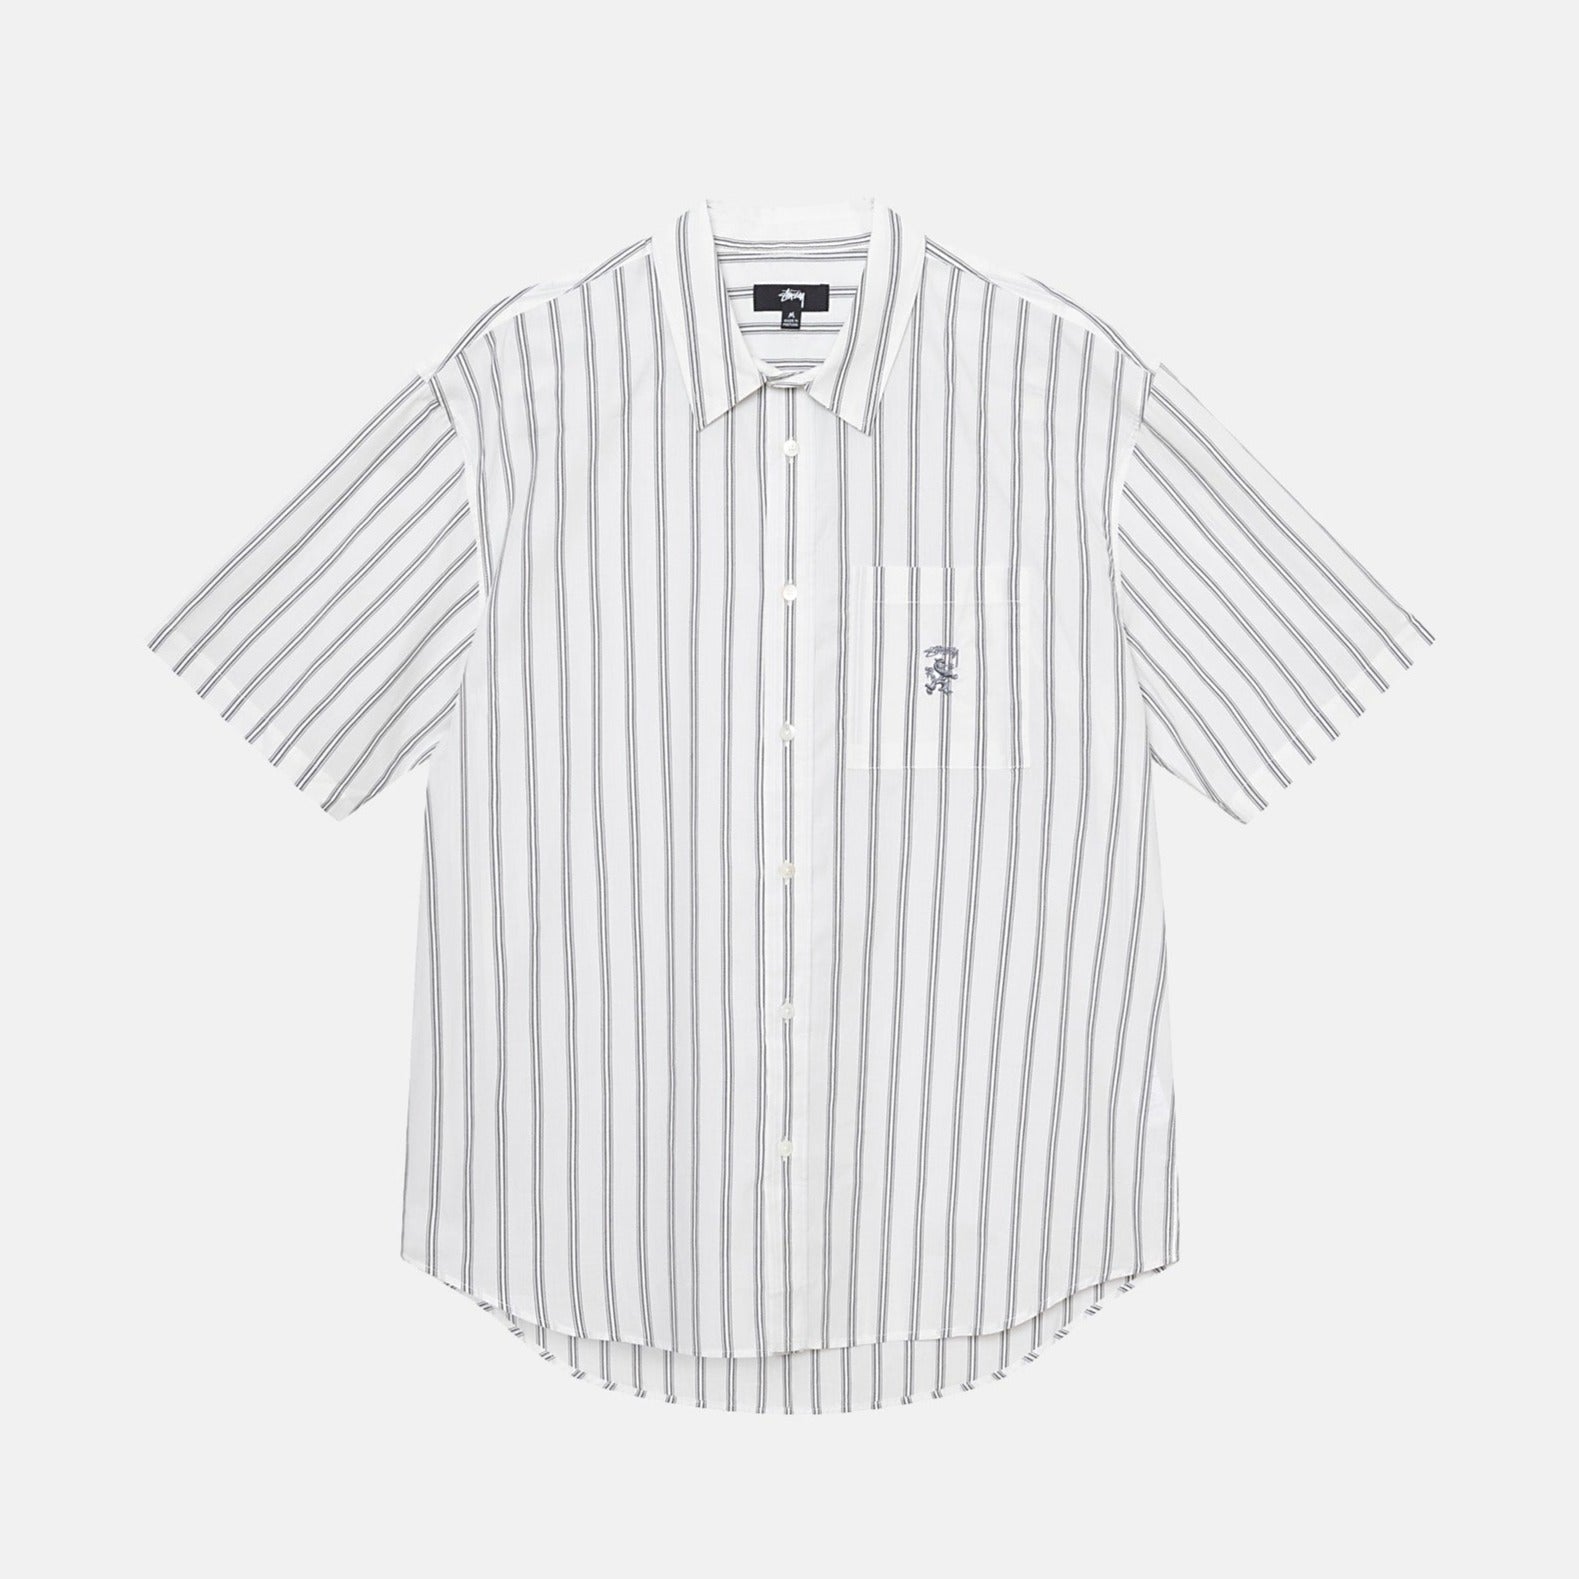 Flat photo of the Boxy Striped SS Shirt - Off White Stripe.